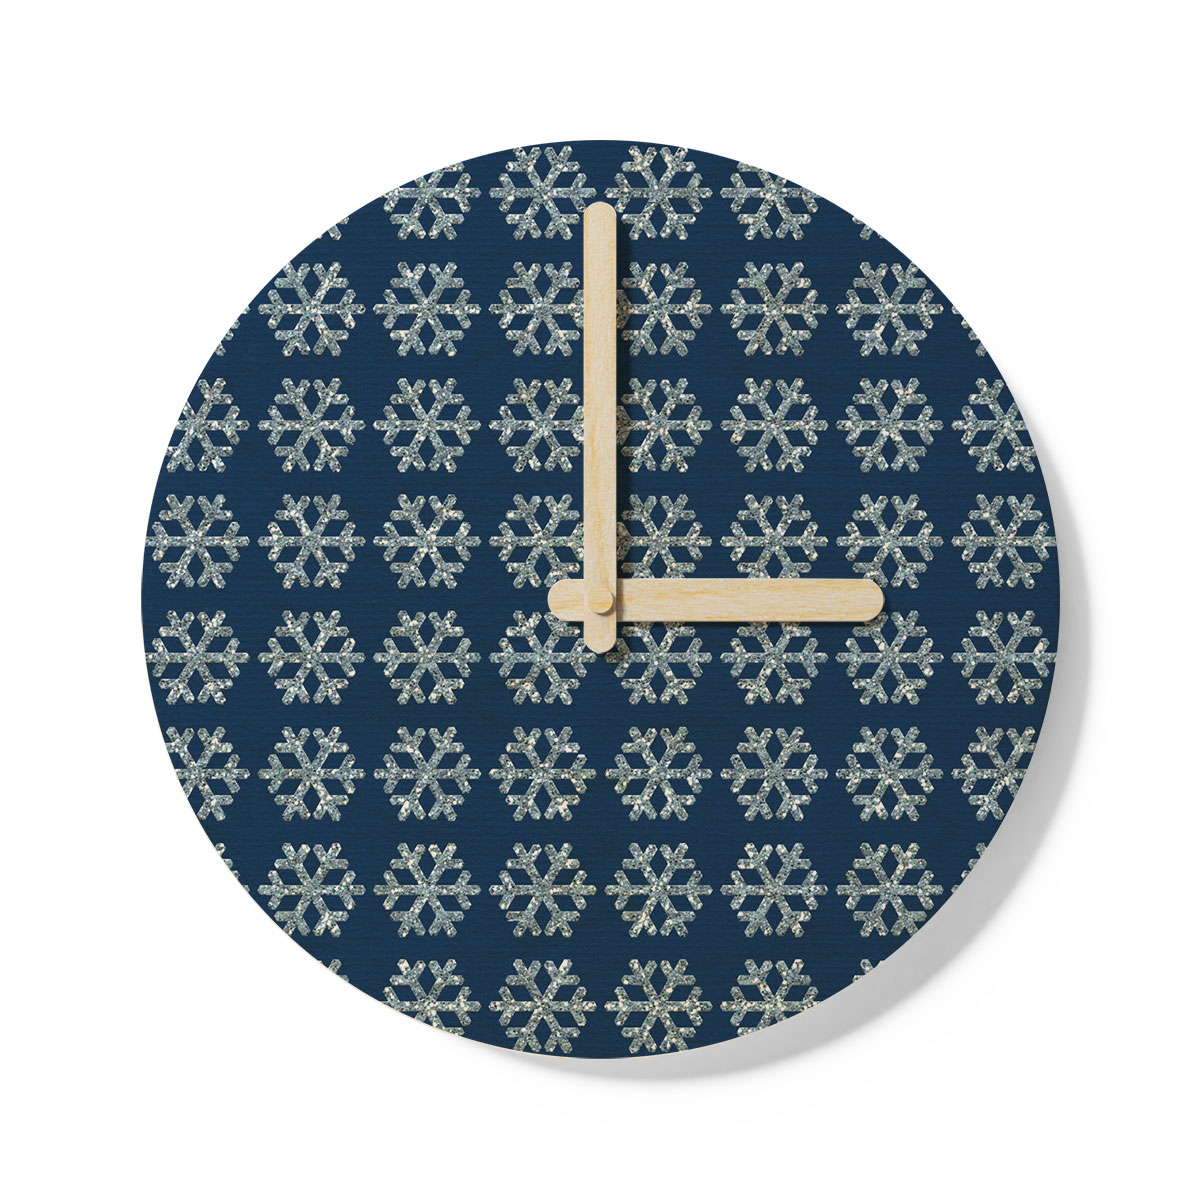 Snowflake, Snowflake Background, Snowflake Pattern 1 Wooden Wall Clock